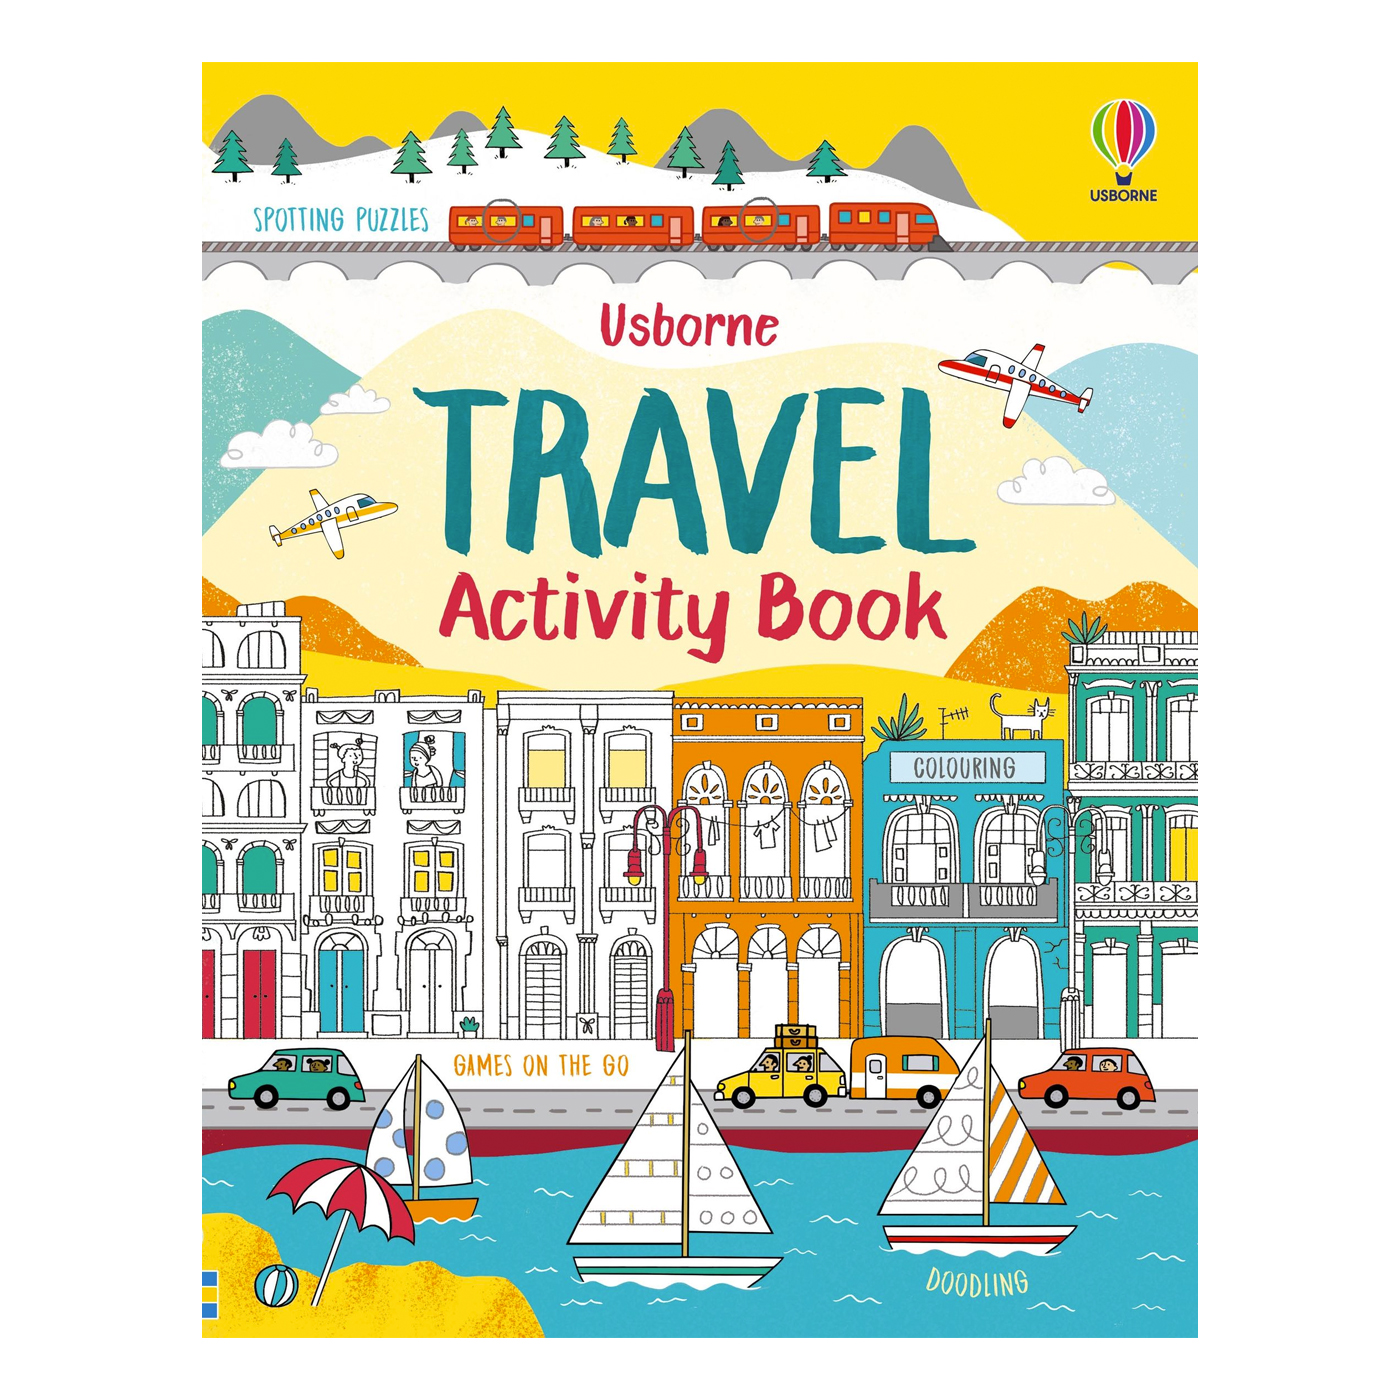  Travel Activity Book